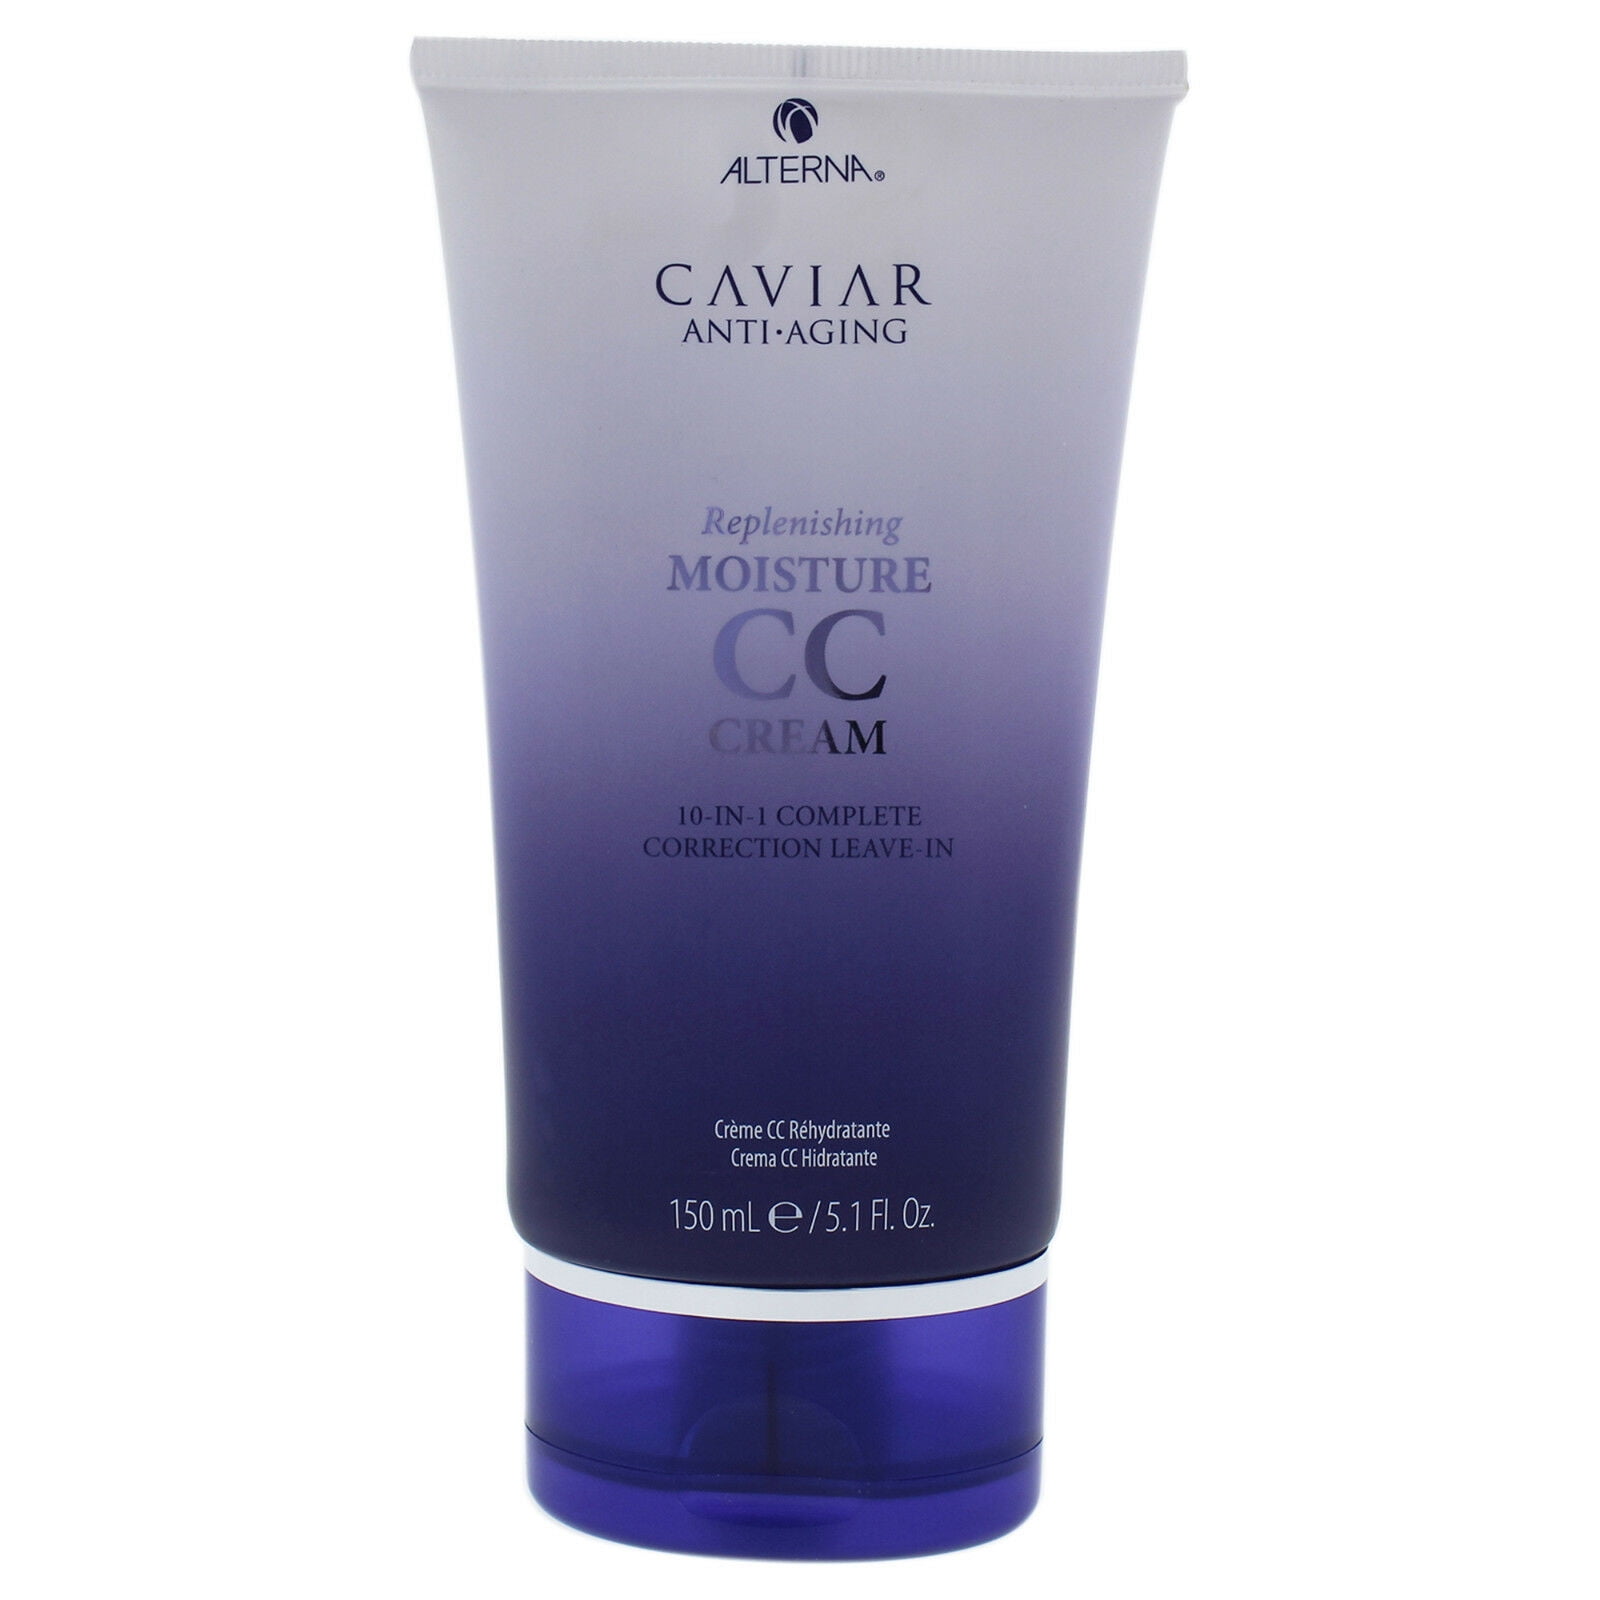 alterna caviar anti aging replenishing moisture cc cream)